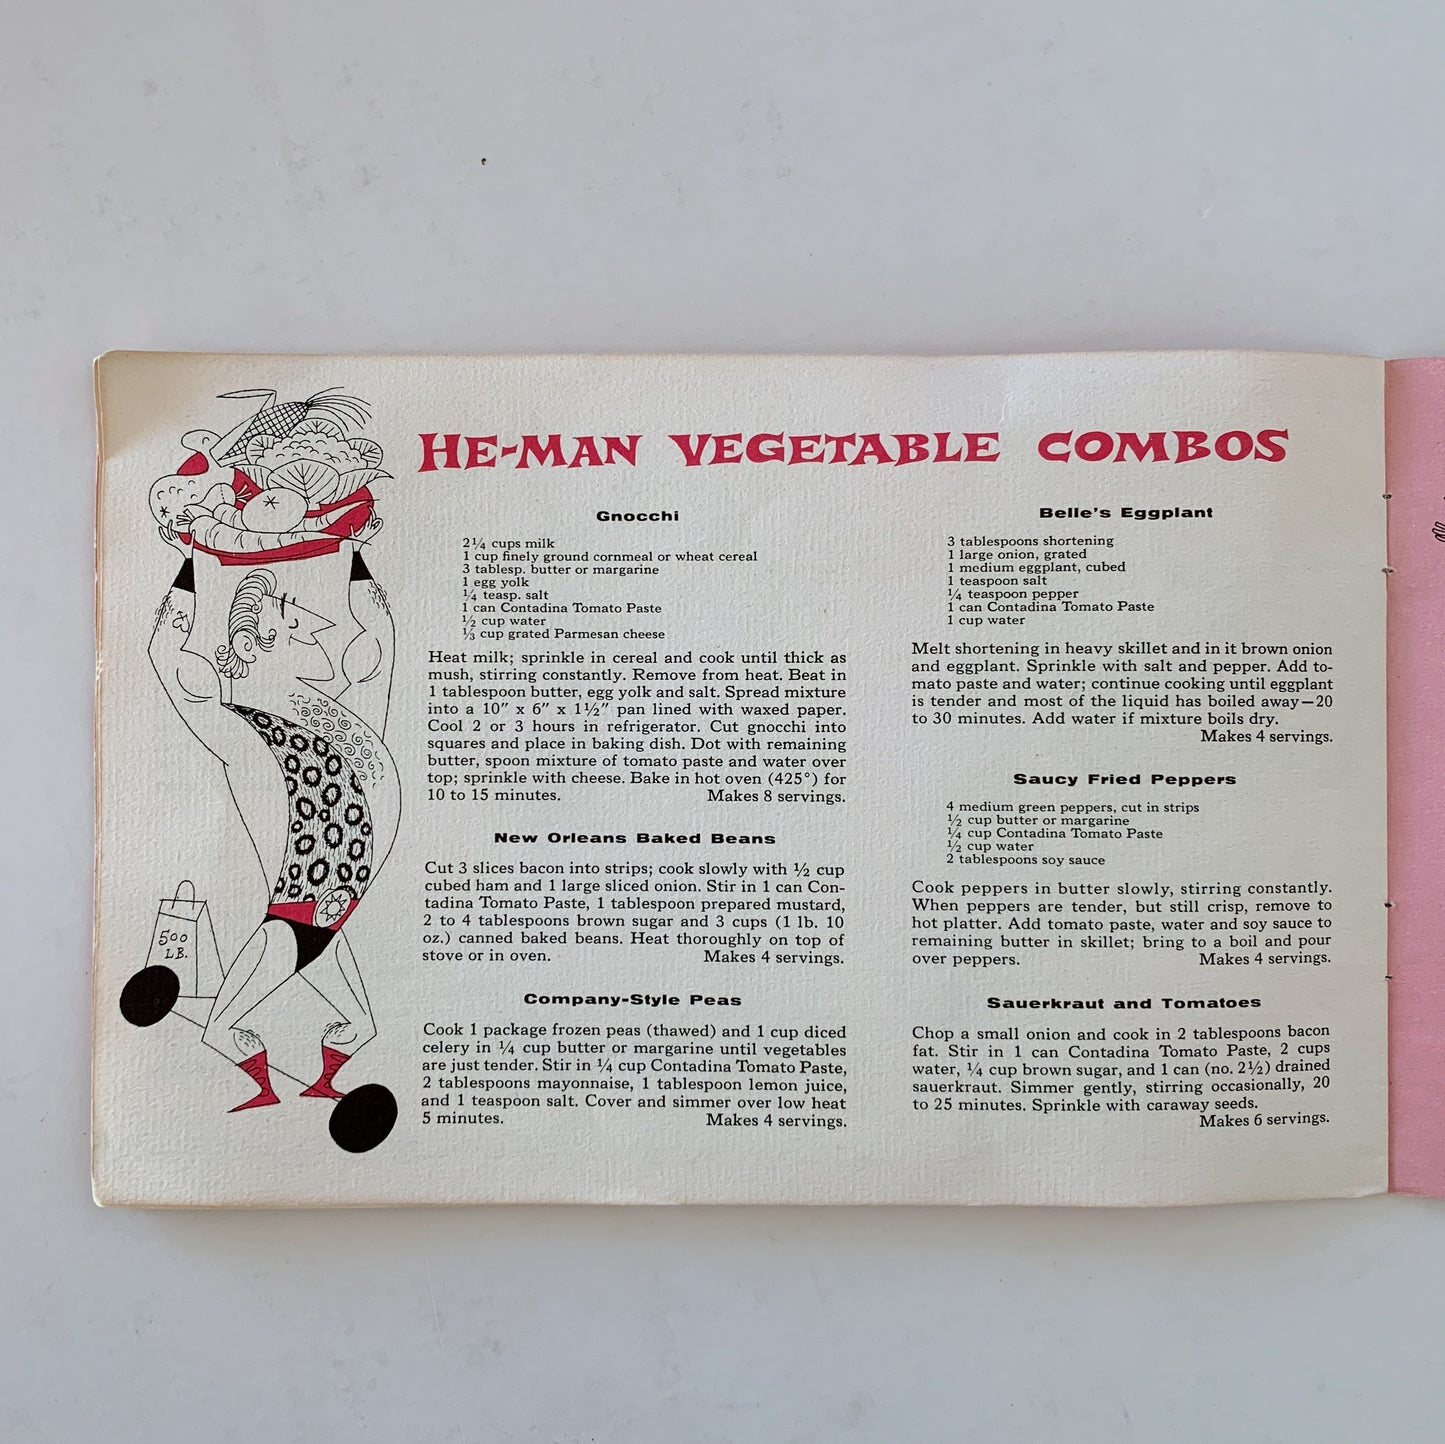 Now You're Cooking With Tomato Paste, Ellen Eden, Contadina Mid Century Cookbook